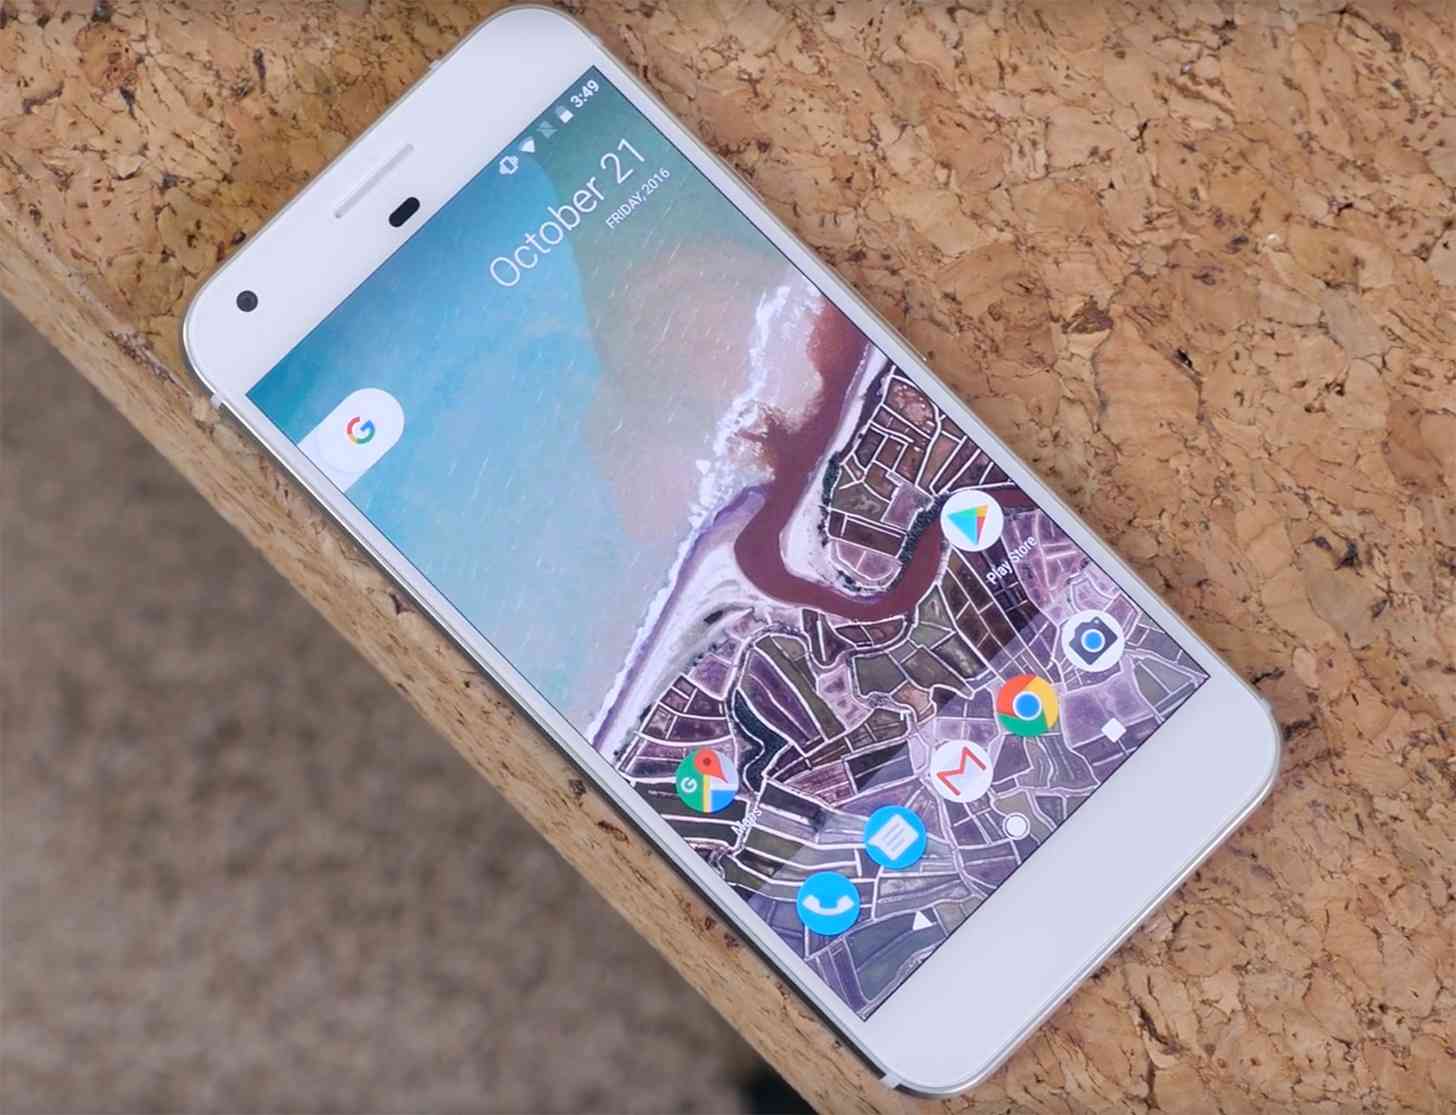 Google Pixel XL hands-on